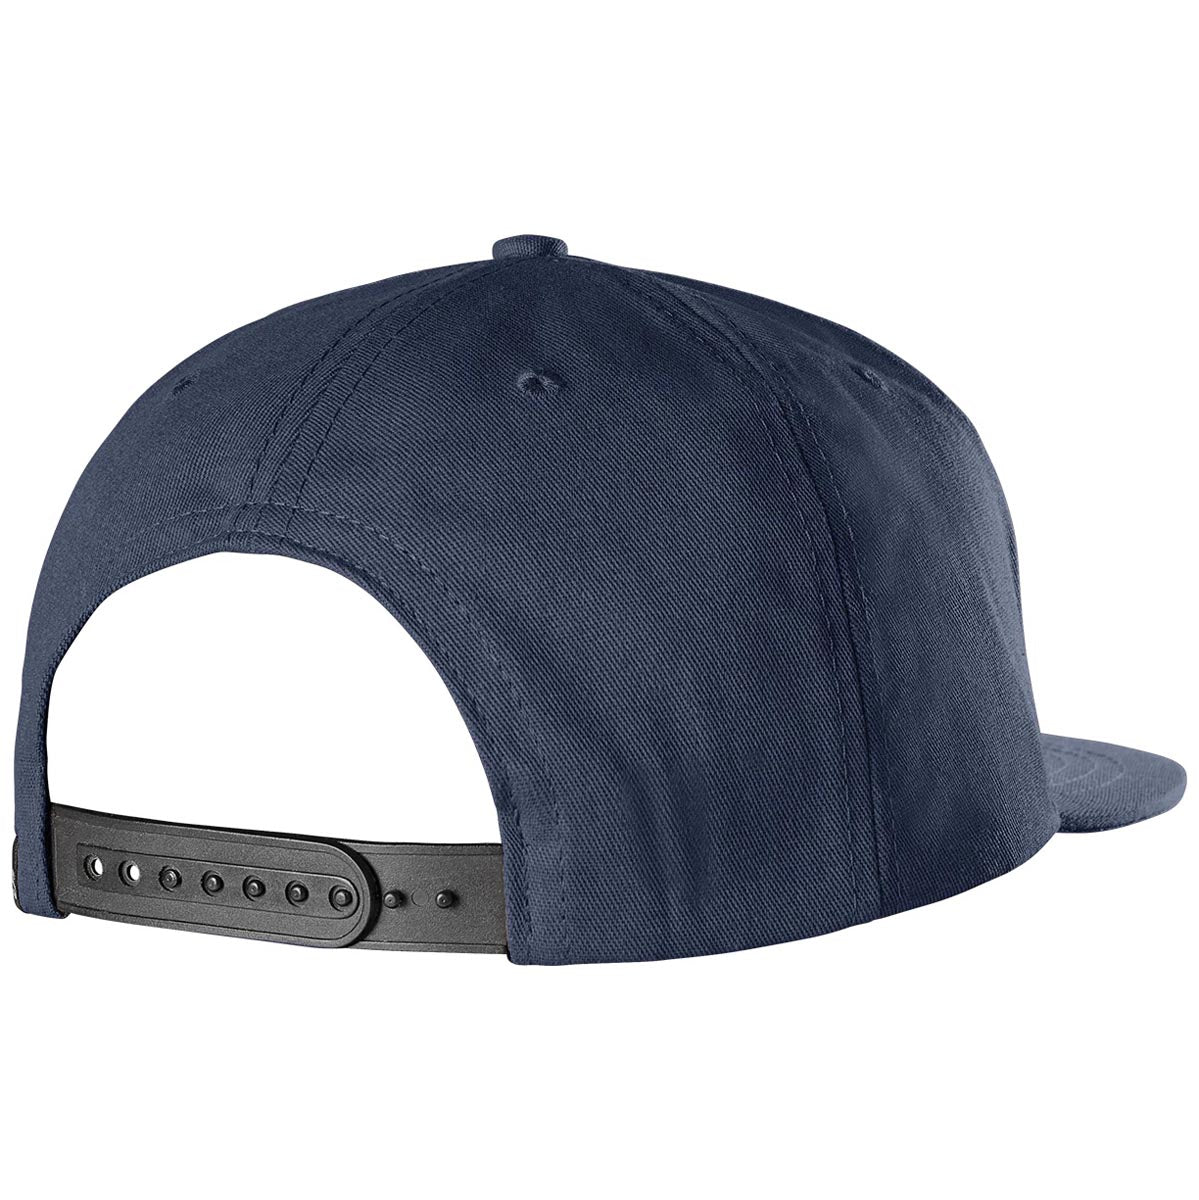 Etnies Icon Snapback Hat - Dark Navy image 2